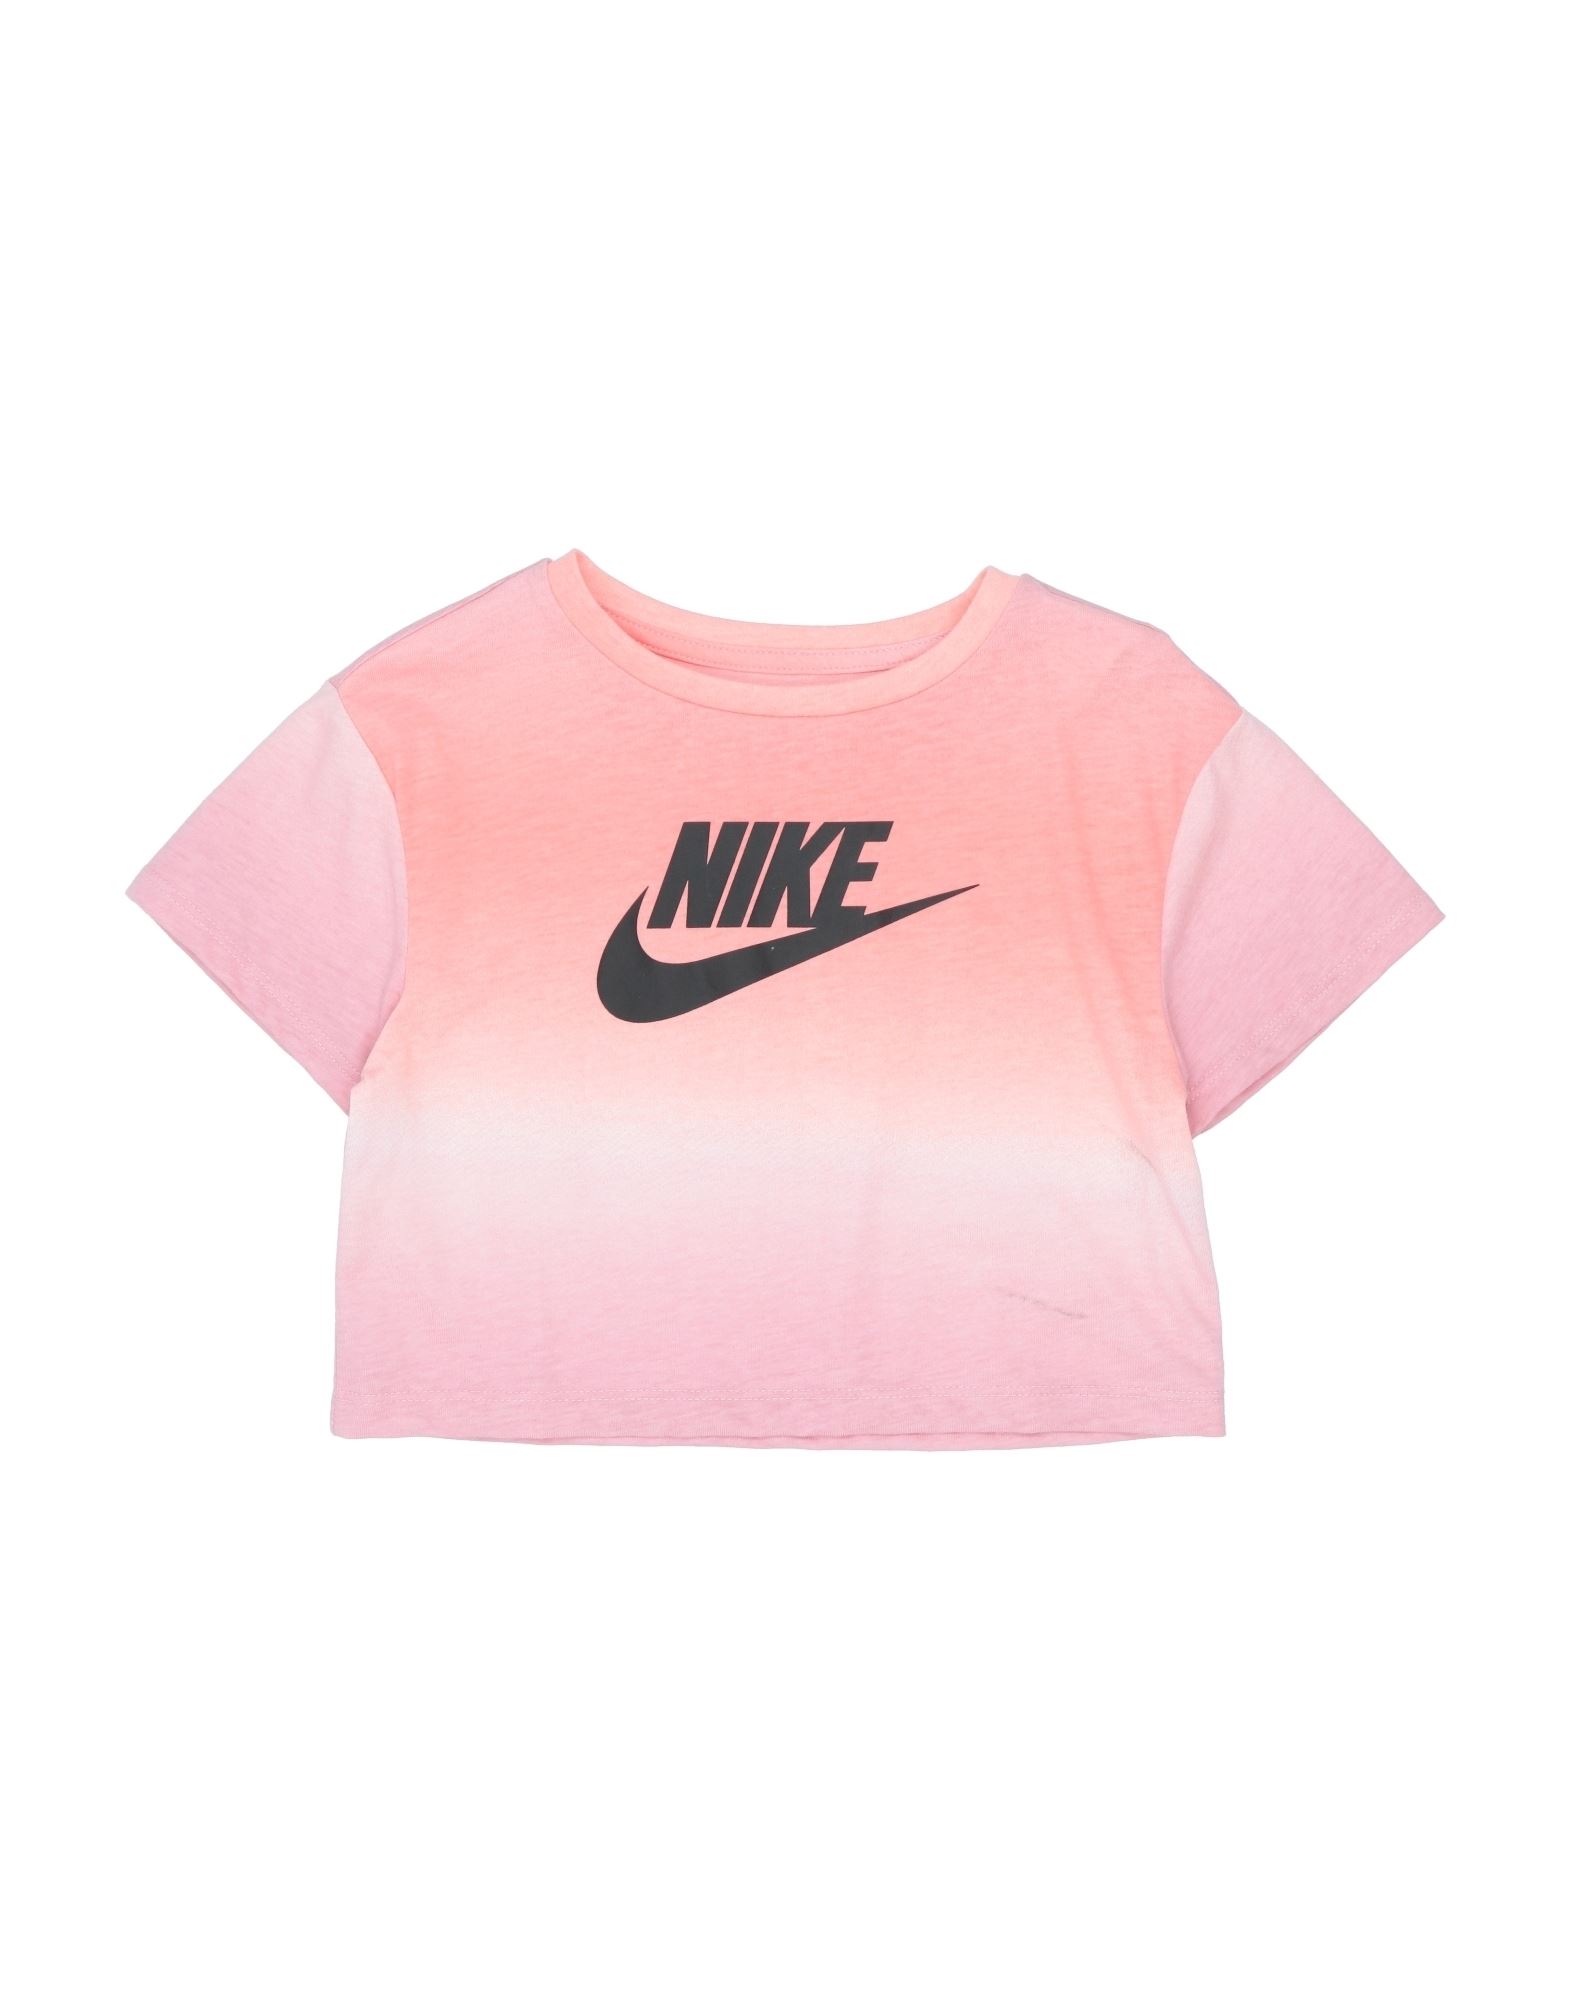 Nike Kids' T-shirts In Pink